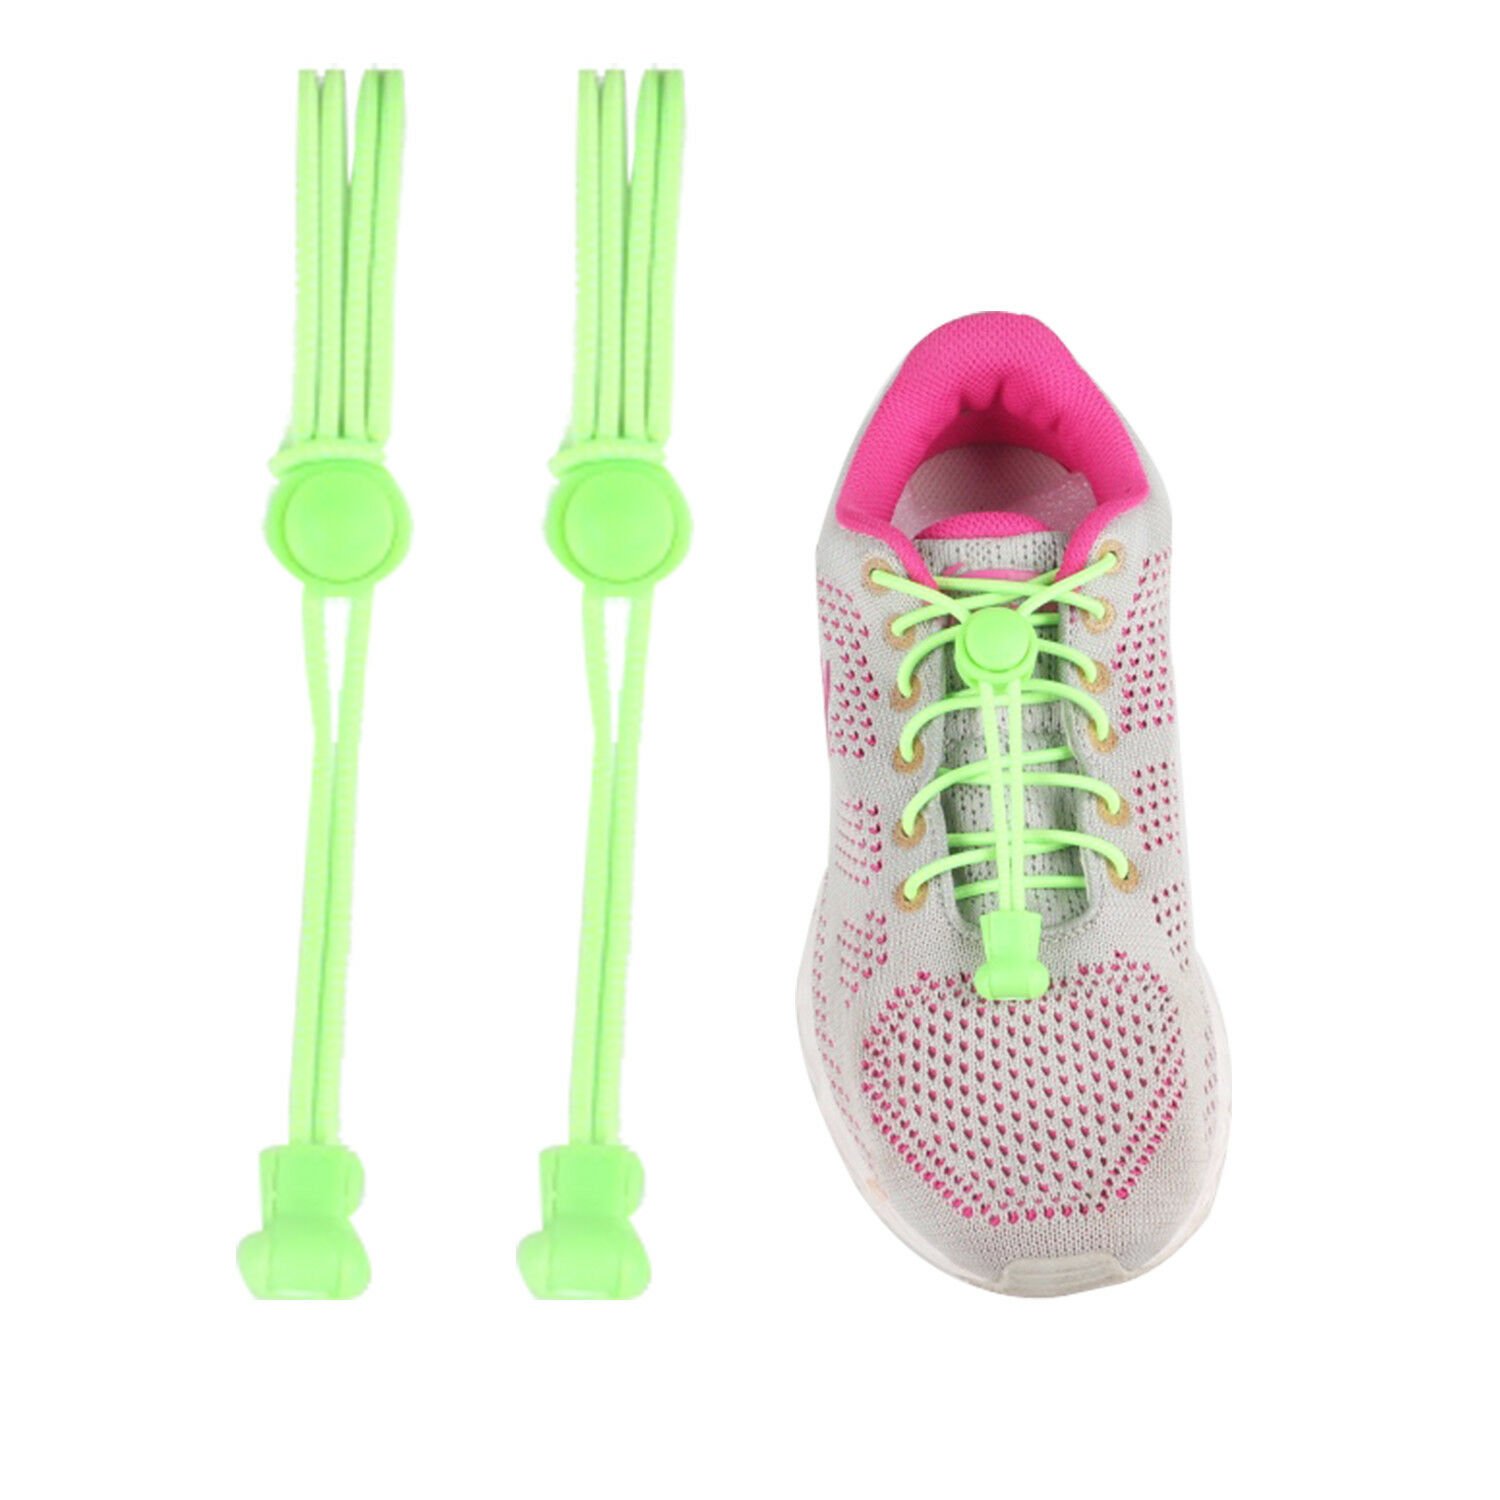 New No Tie Elastic Lock Shoe Laces Shoelaces Running Jogging Sneakers Trainer 